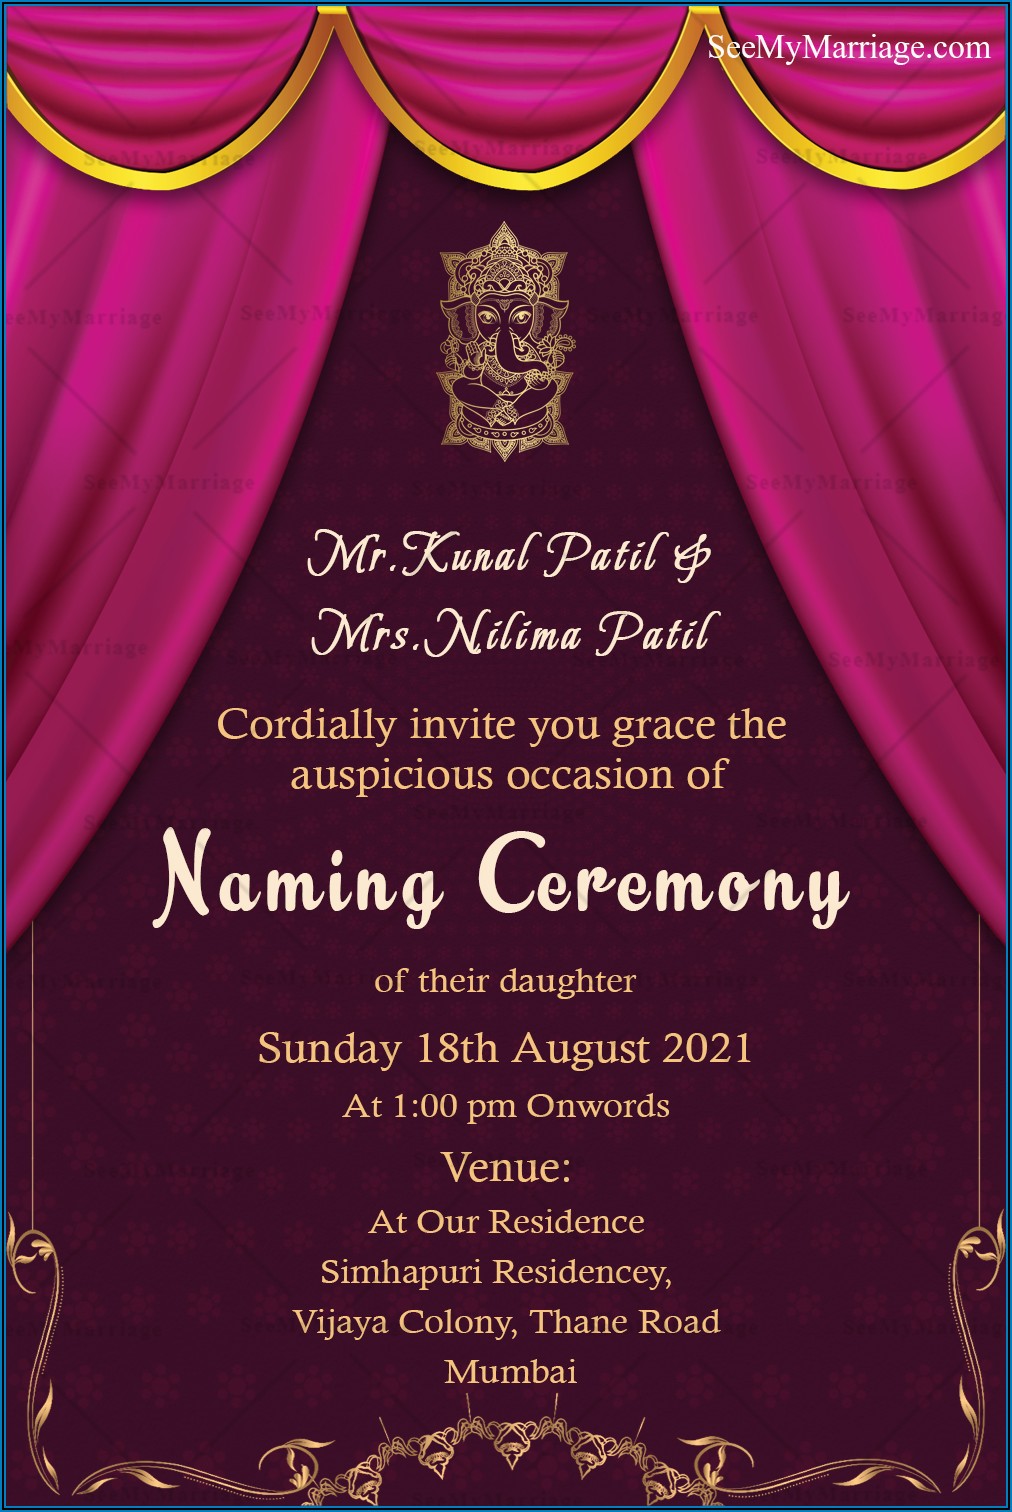 Cradle Ceremony Invitation Card Background